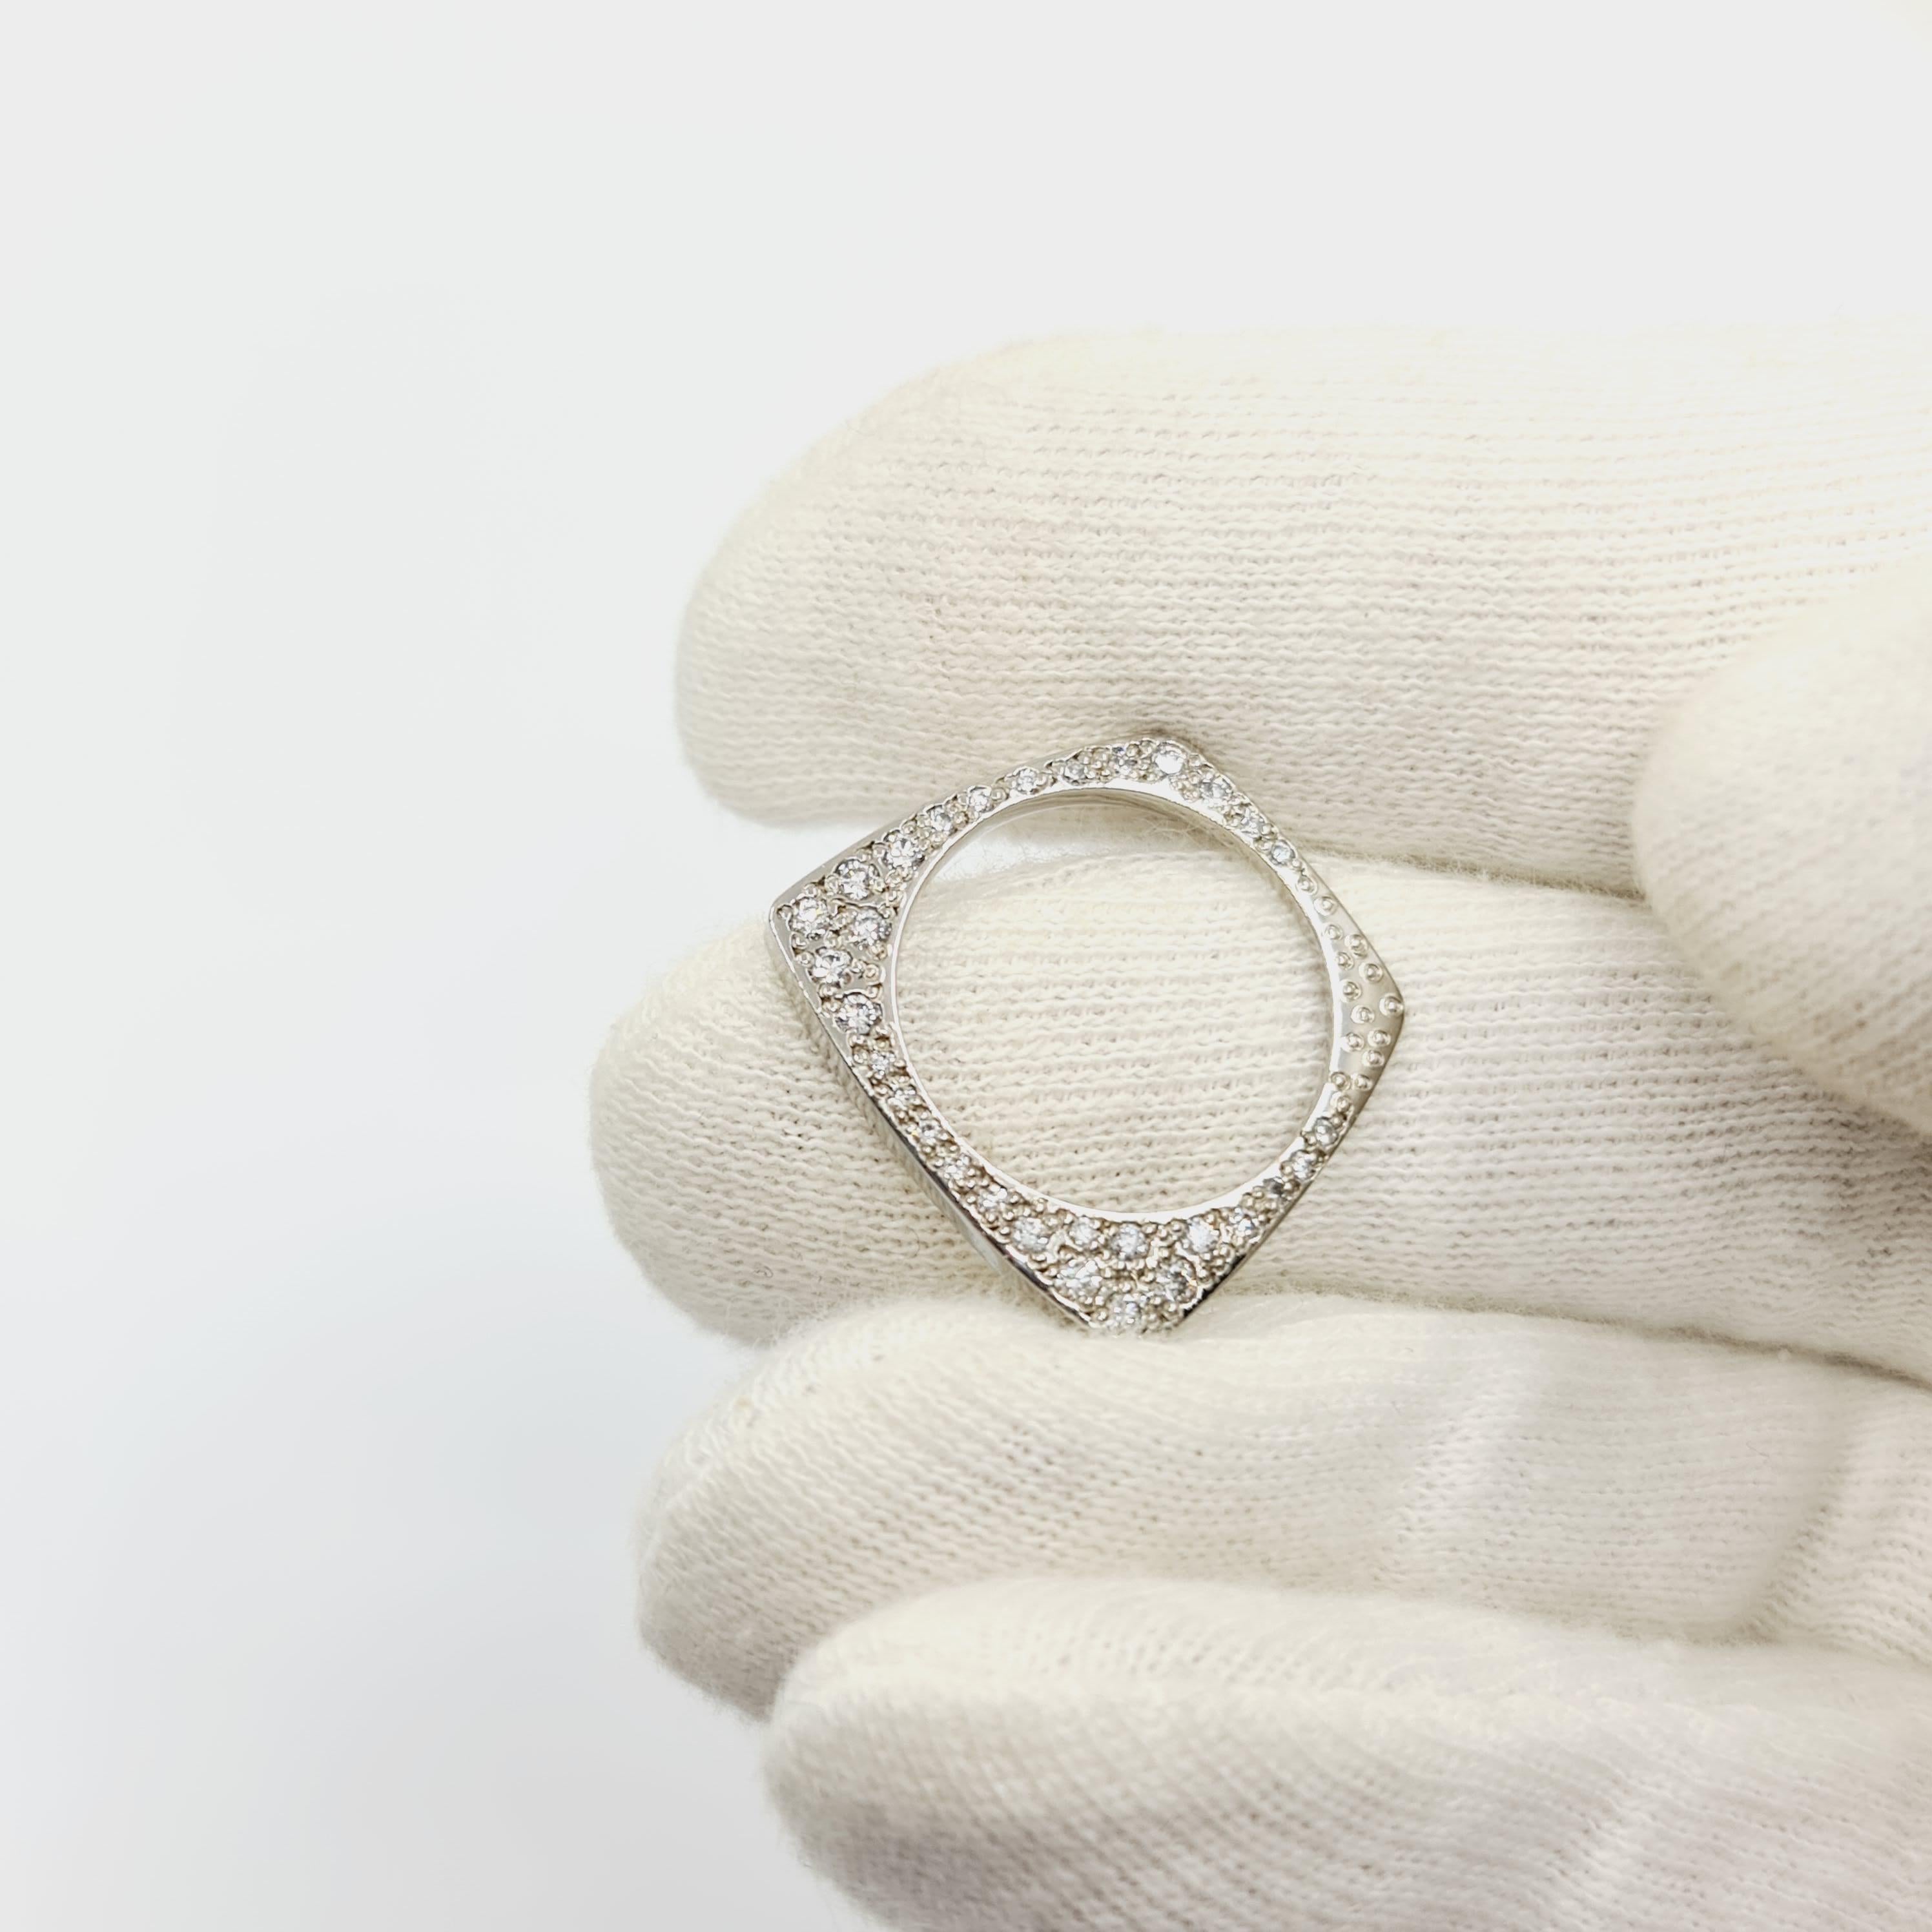 0.365 Carat Diamond Ring G/SI1 18k White Gold, 31 Brilliant Cut Pave Diamonds For Sale 3